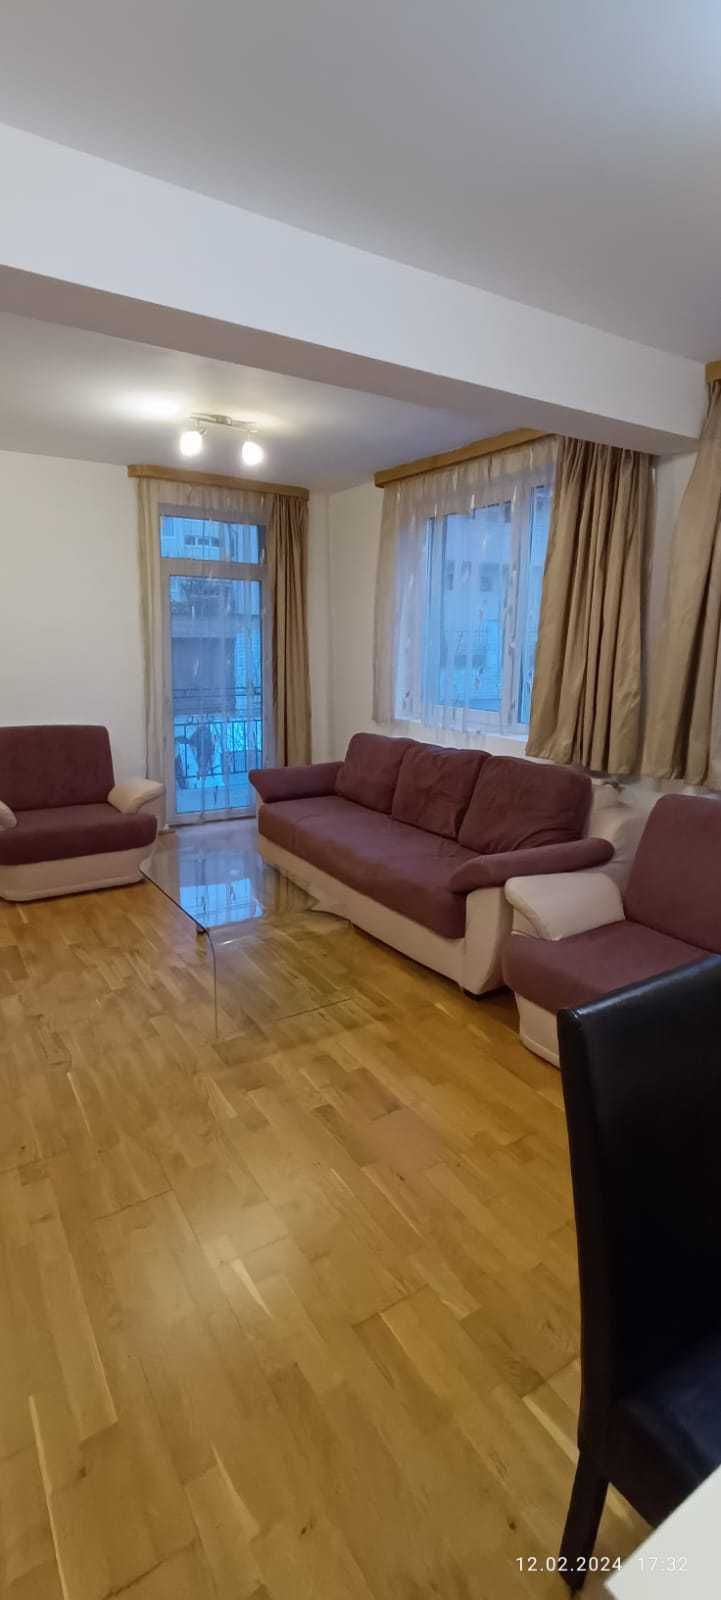 De Închiriat Apartament 2 Camere, Zorilor, Cluj-Napoca(55mp)